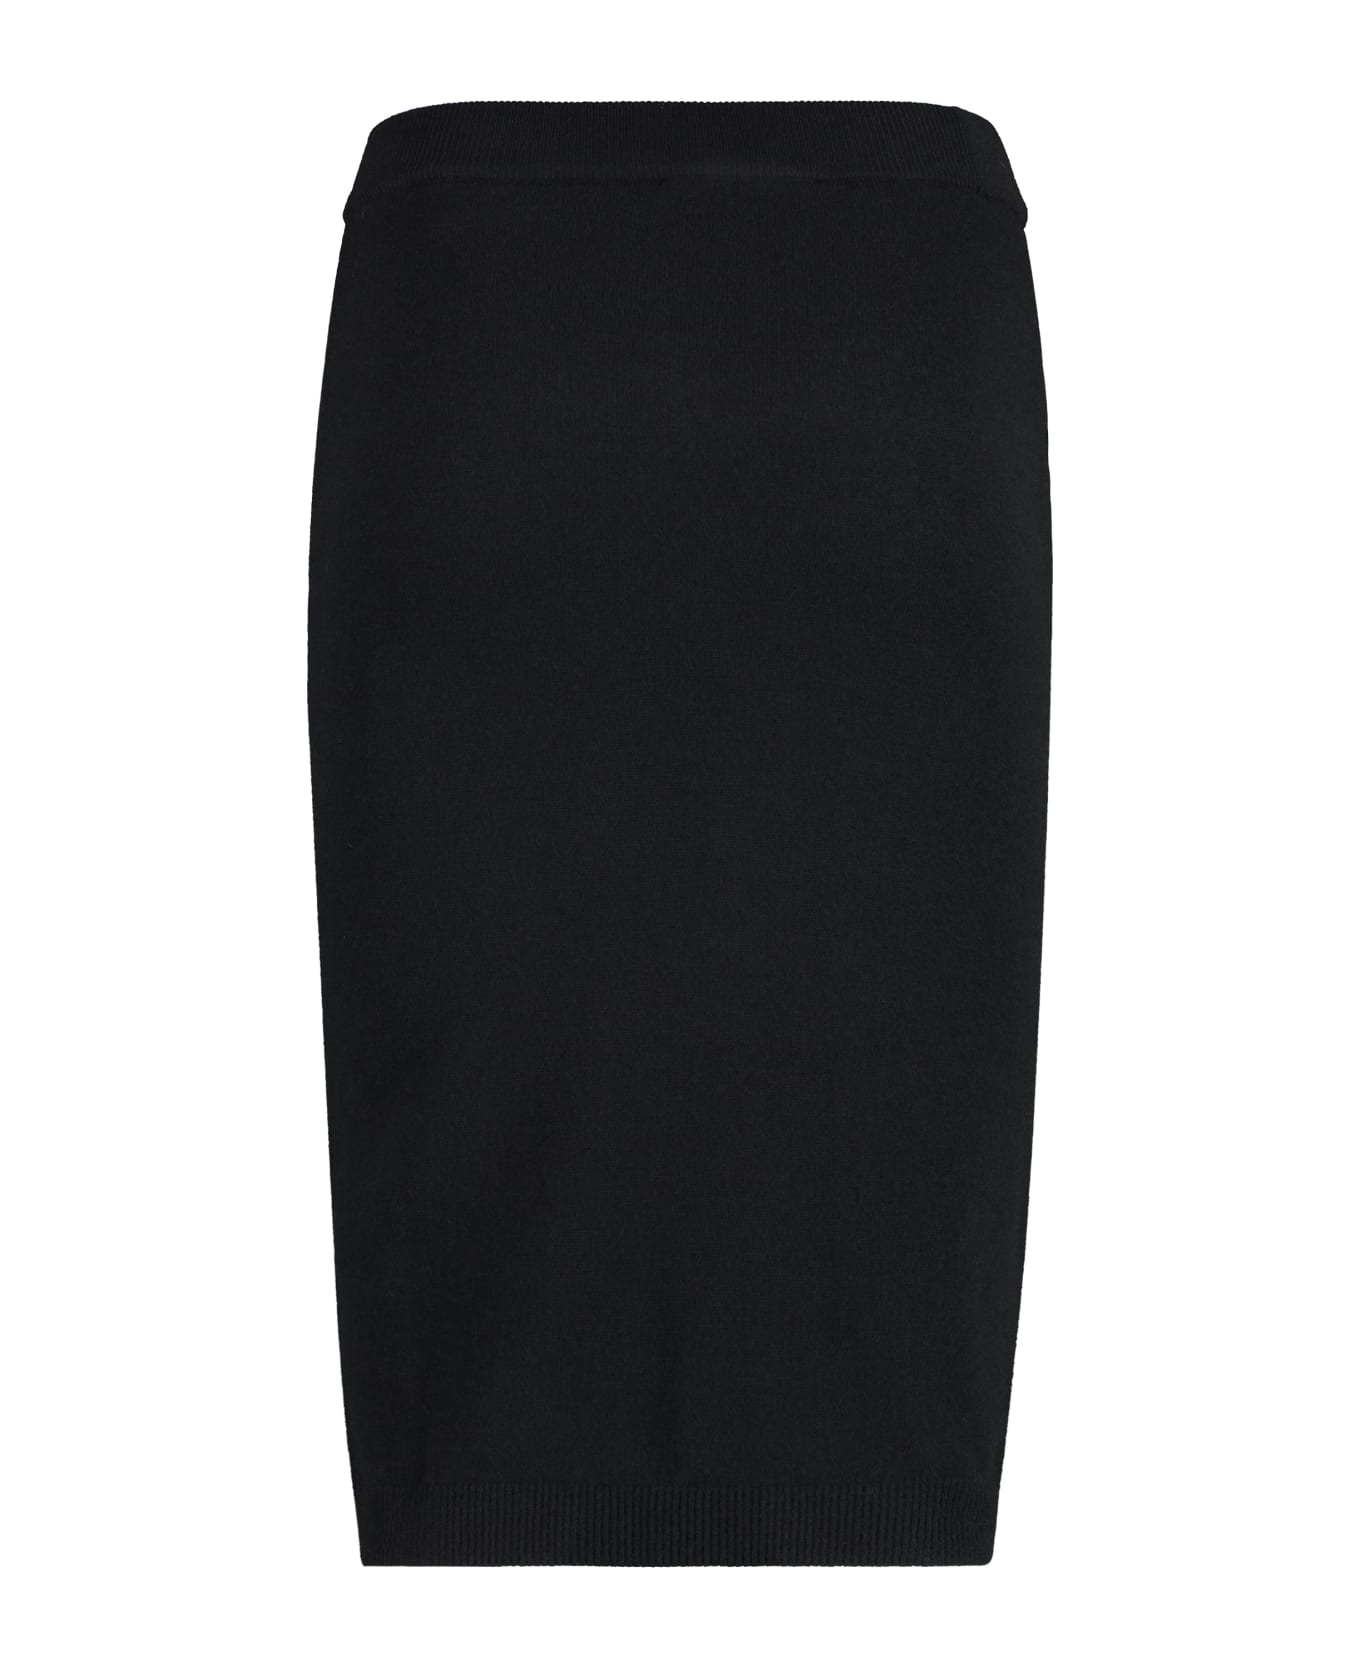 Vivienne Westwood Bea Knit Skirt - black